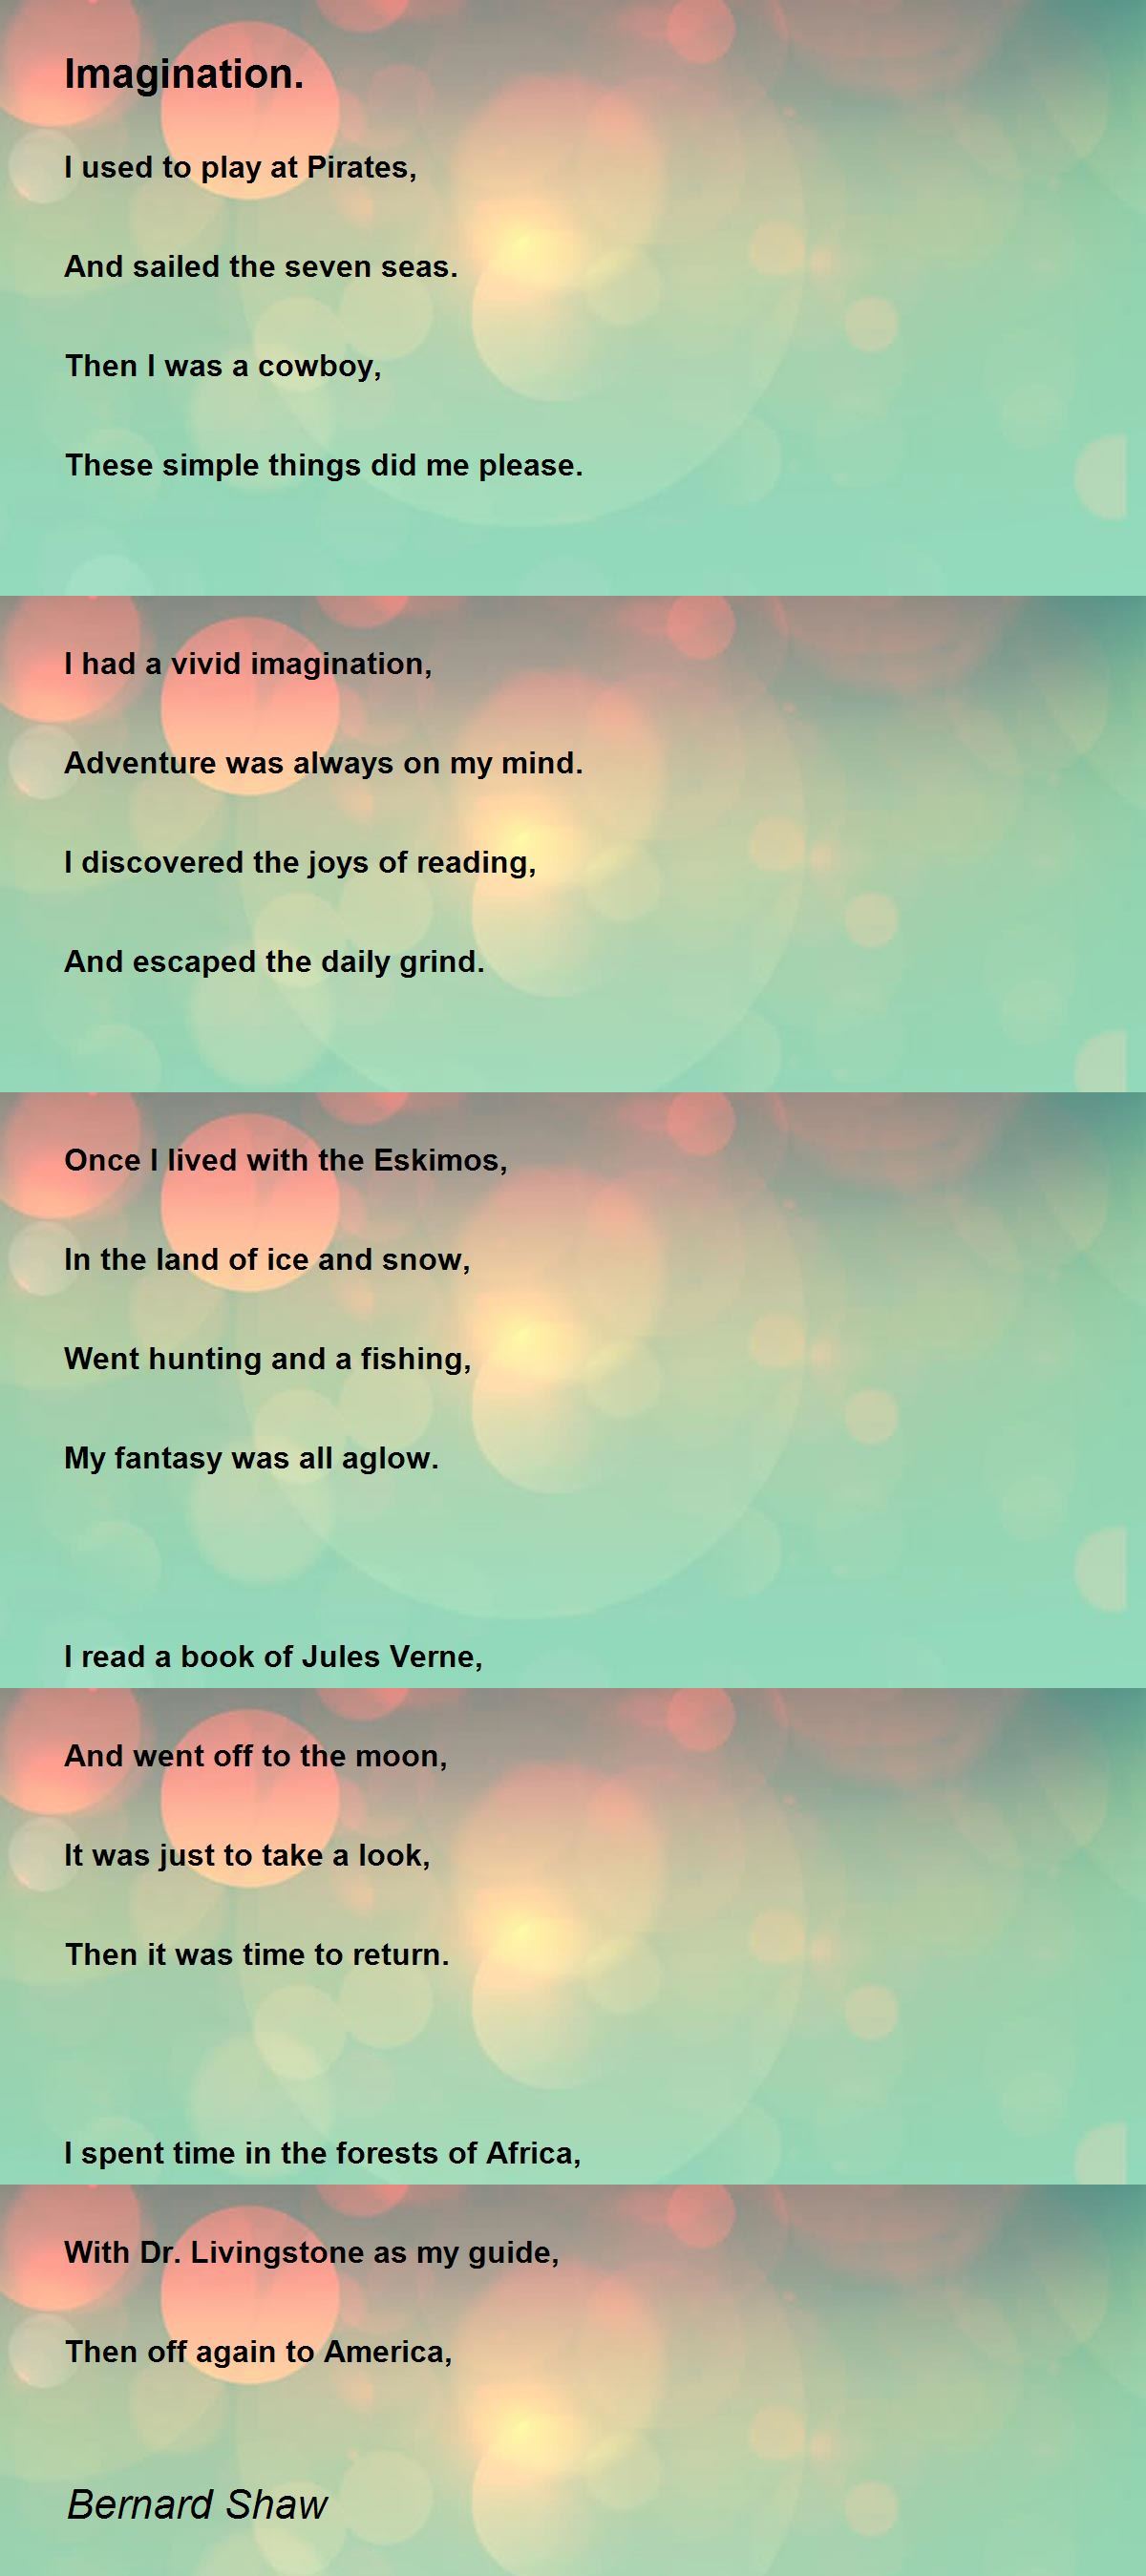 summary of the poem imagination by george bernard shaw